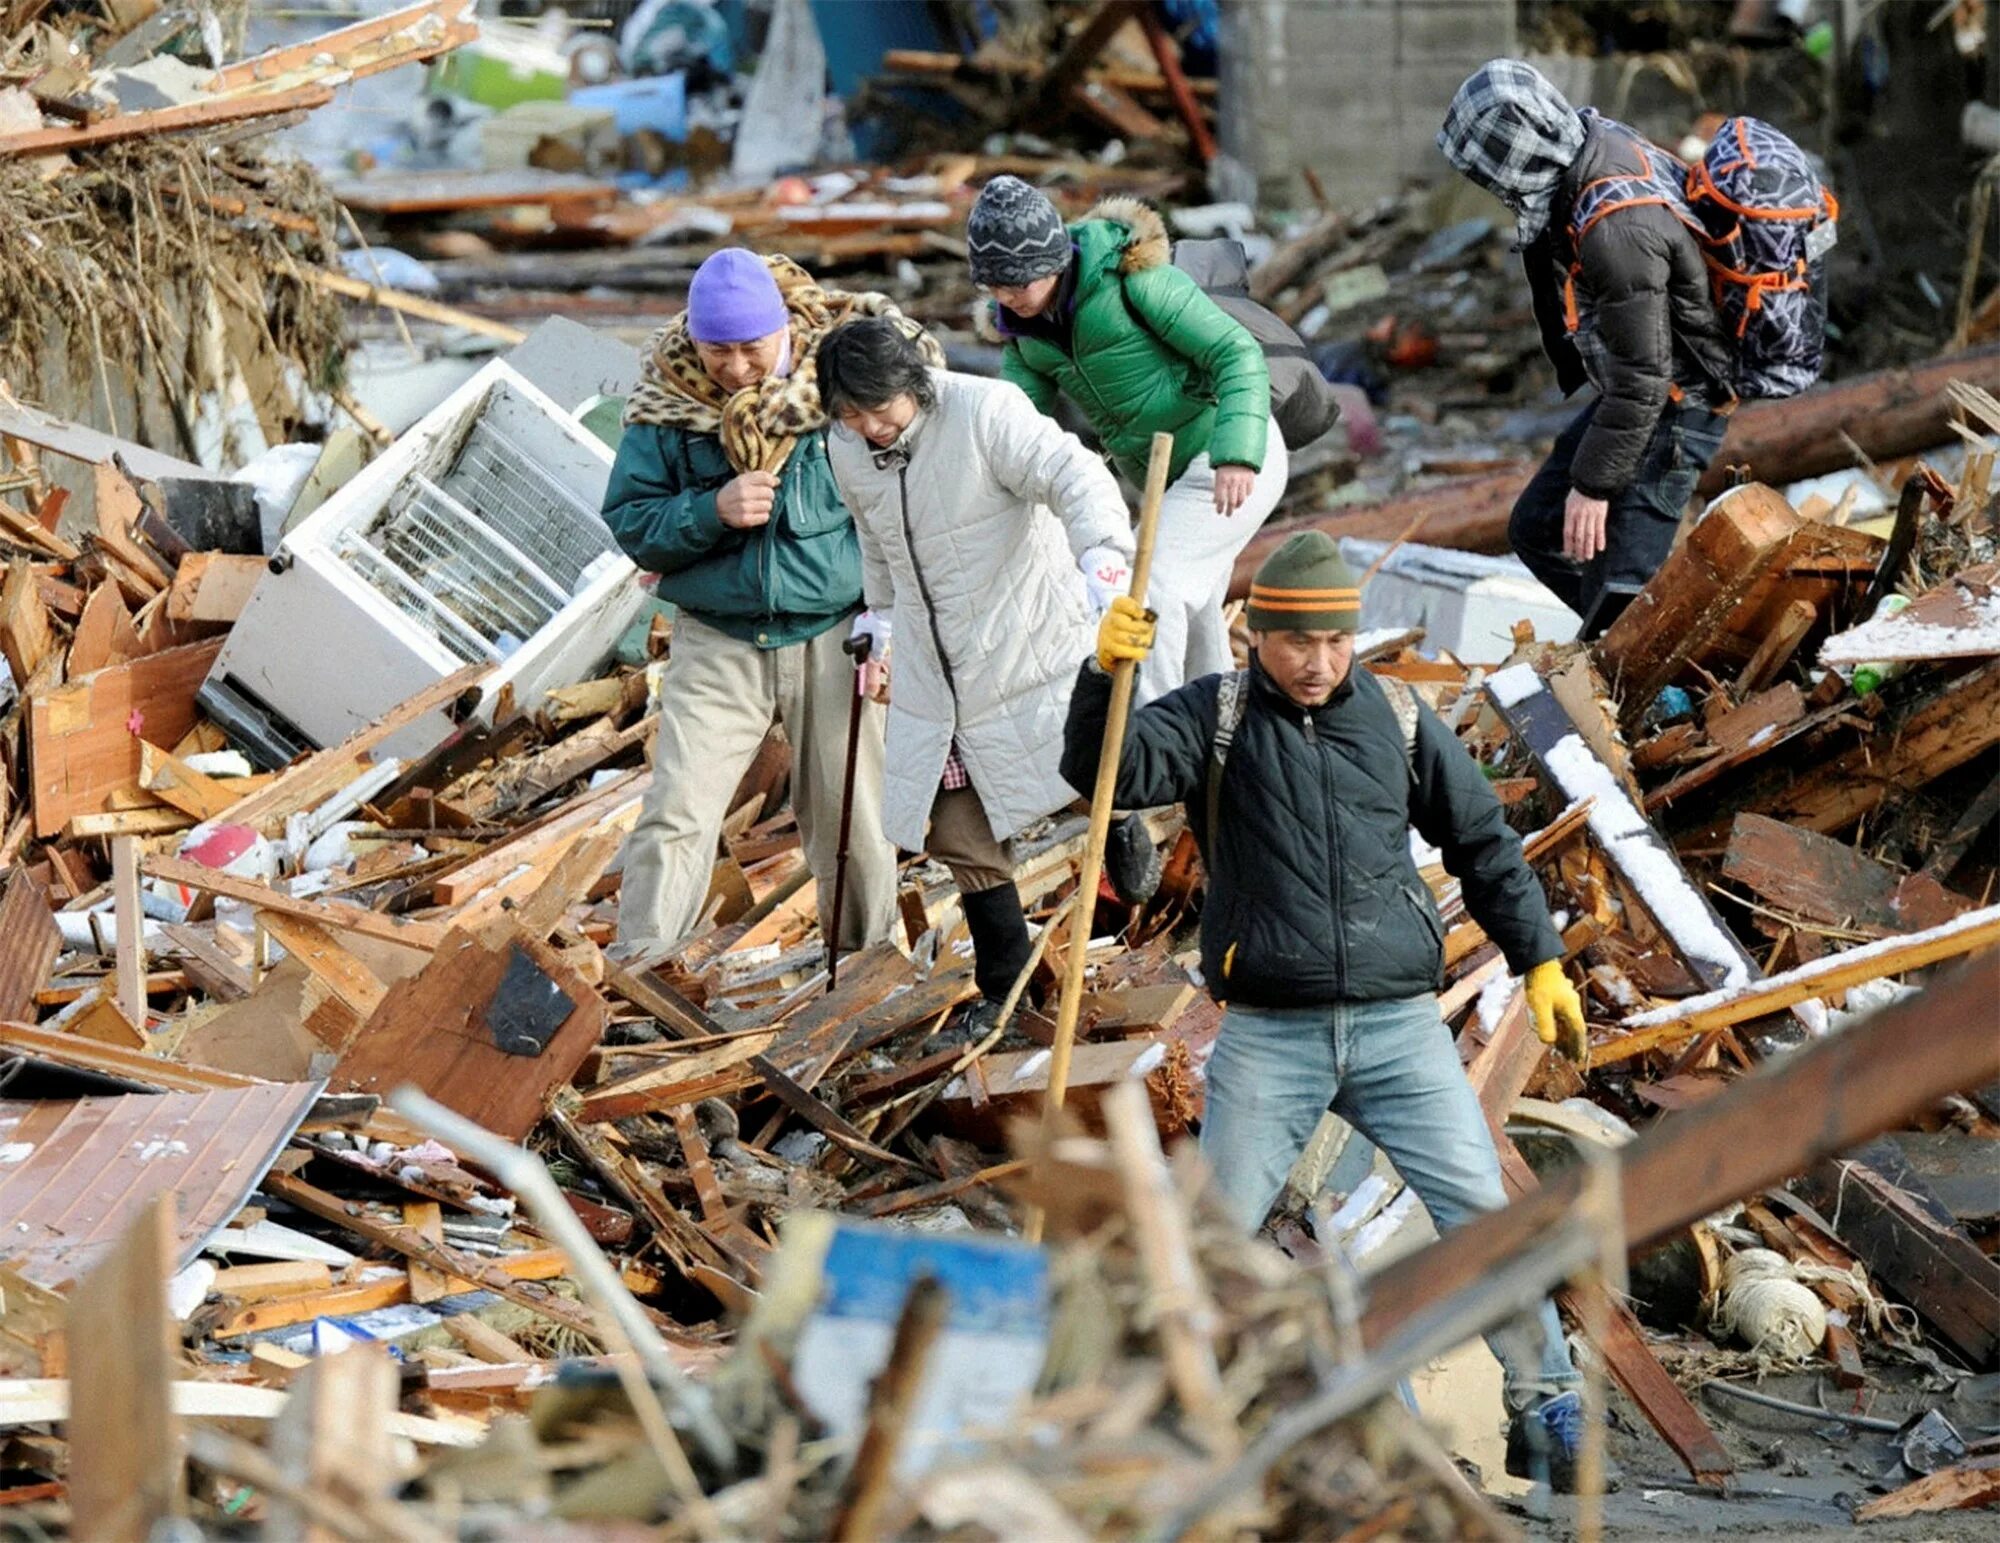 The hunt natural disaster. ЦУНАМИ 2011. Катастрофа в Японии 2011. ЦУНАМИ 2011 года в Японии. Землетрясение в Японии 2011.